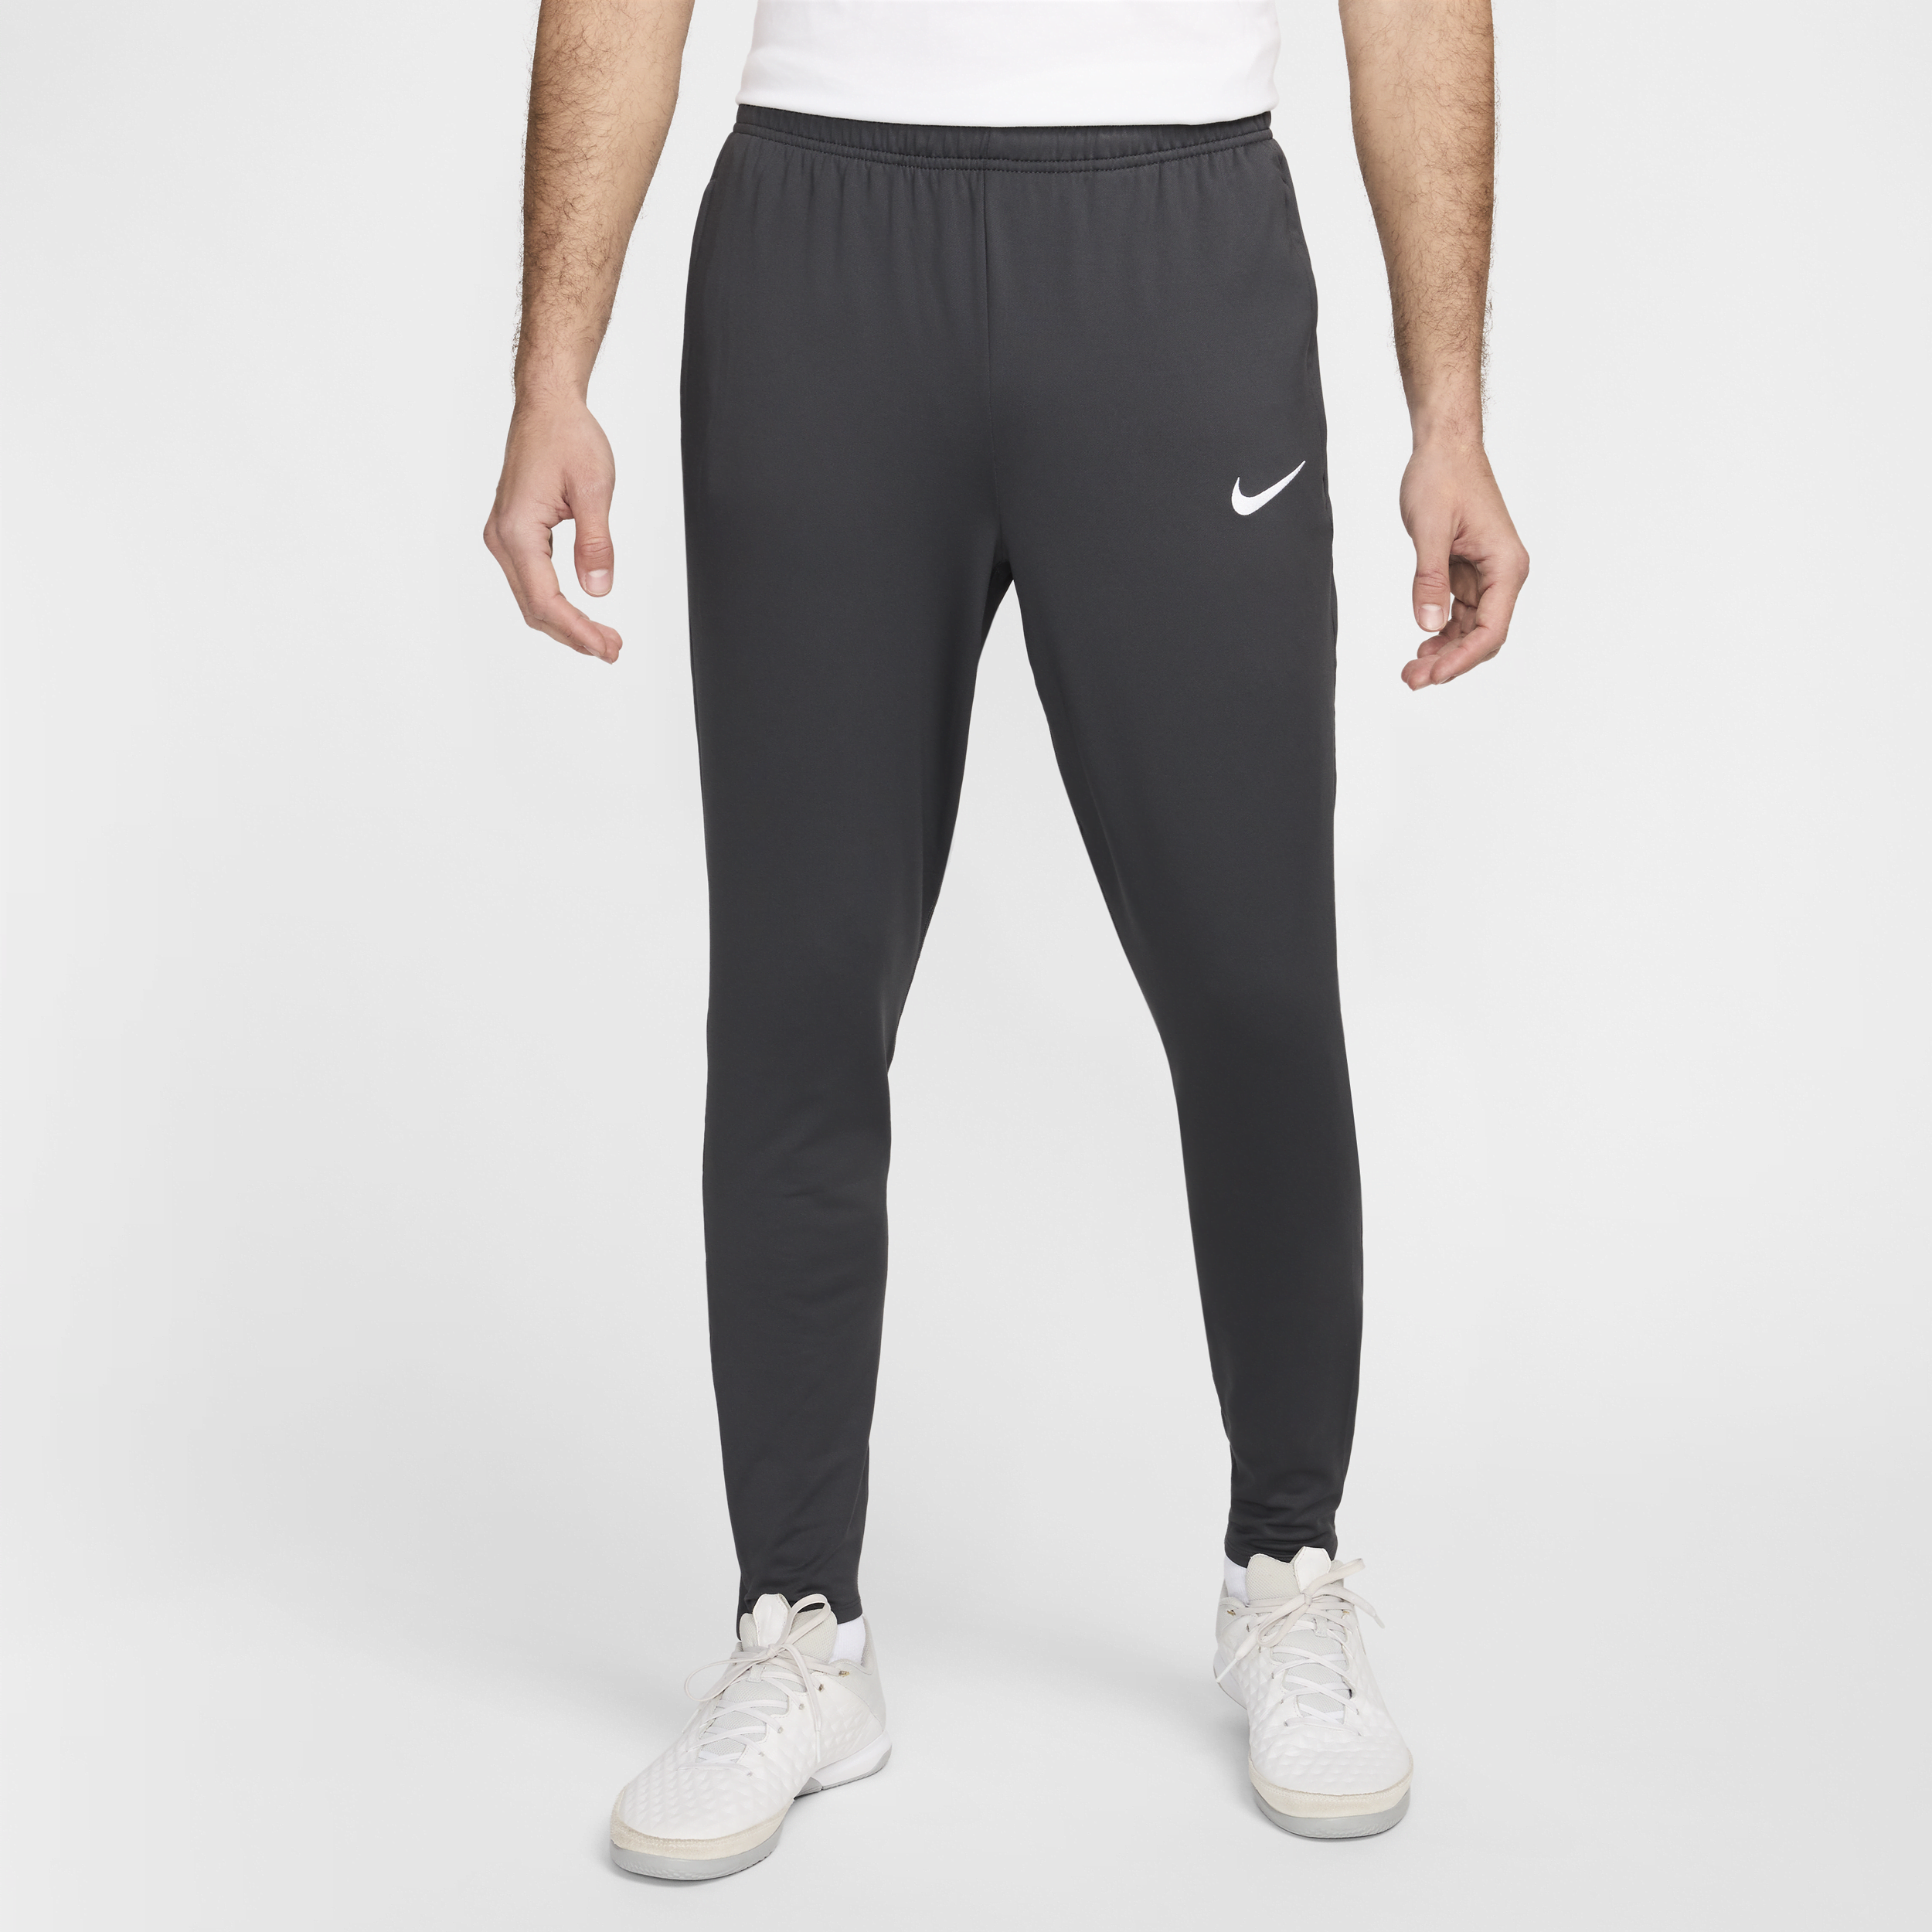 Pantaloni da calcio Nike Dri-FIT Turchia Strike – Uomo - Grigio